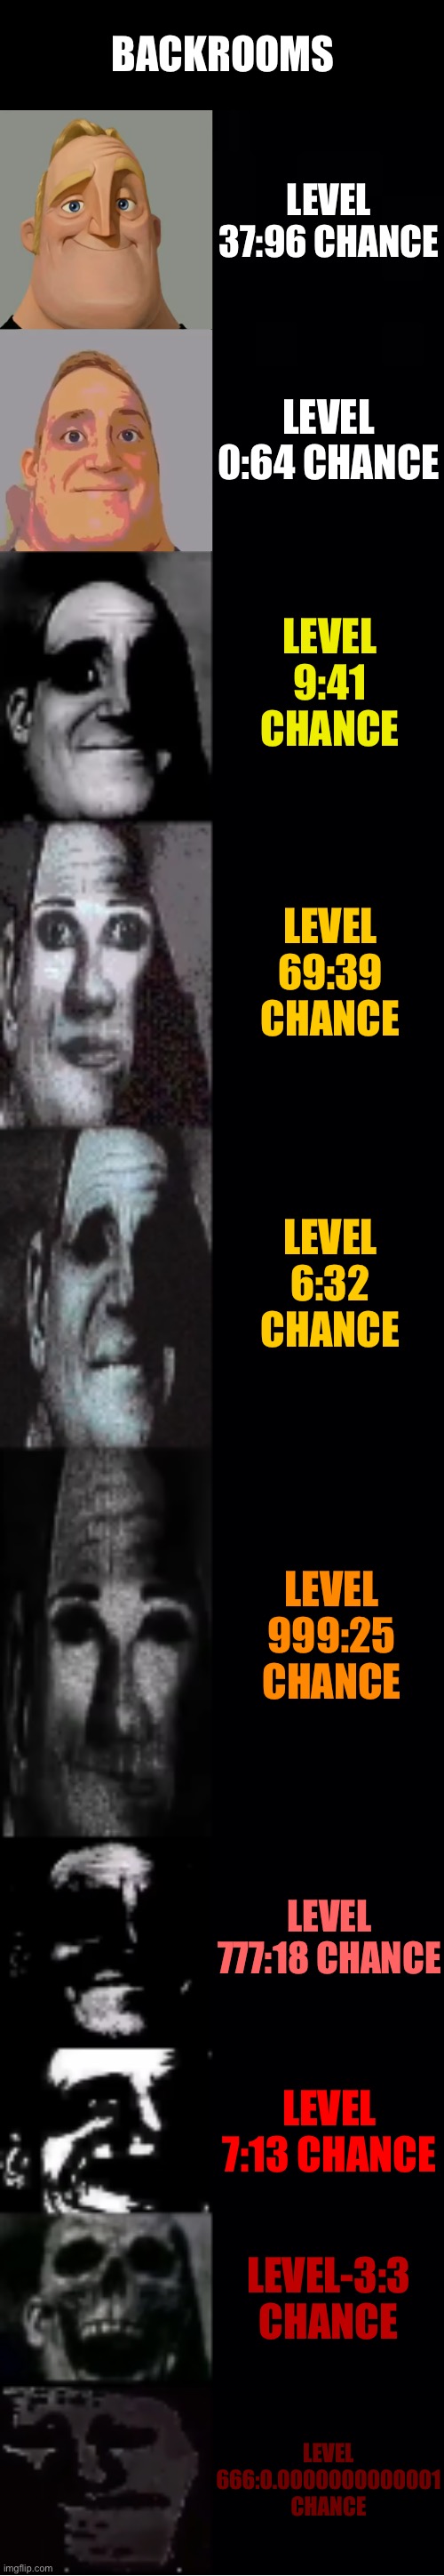 BACKROOMS - LEVEL 666 